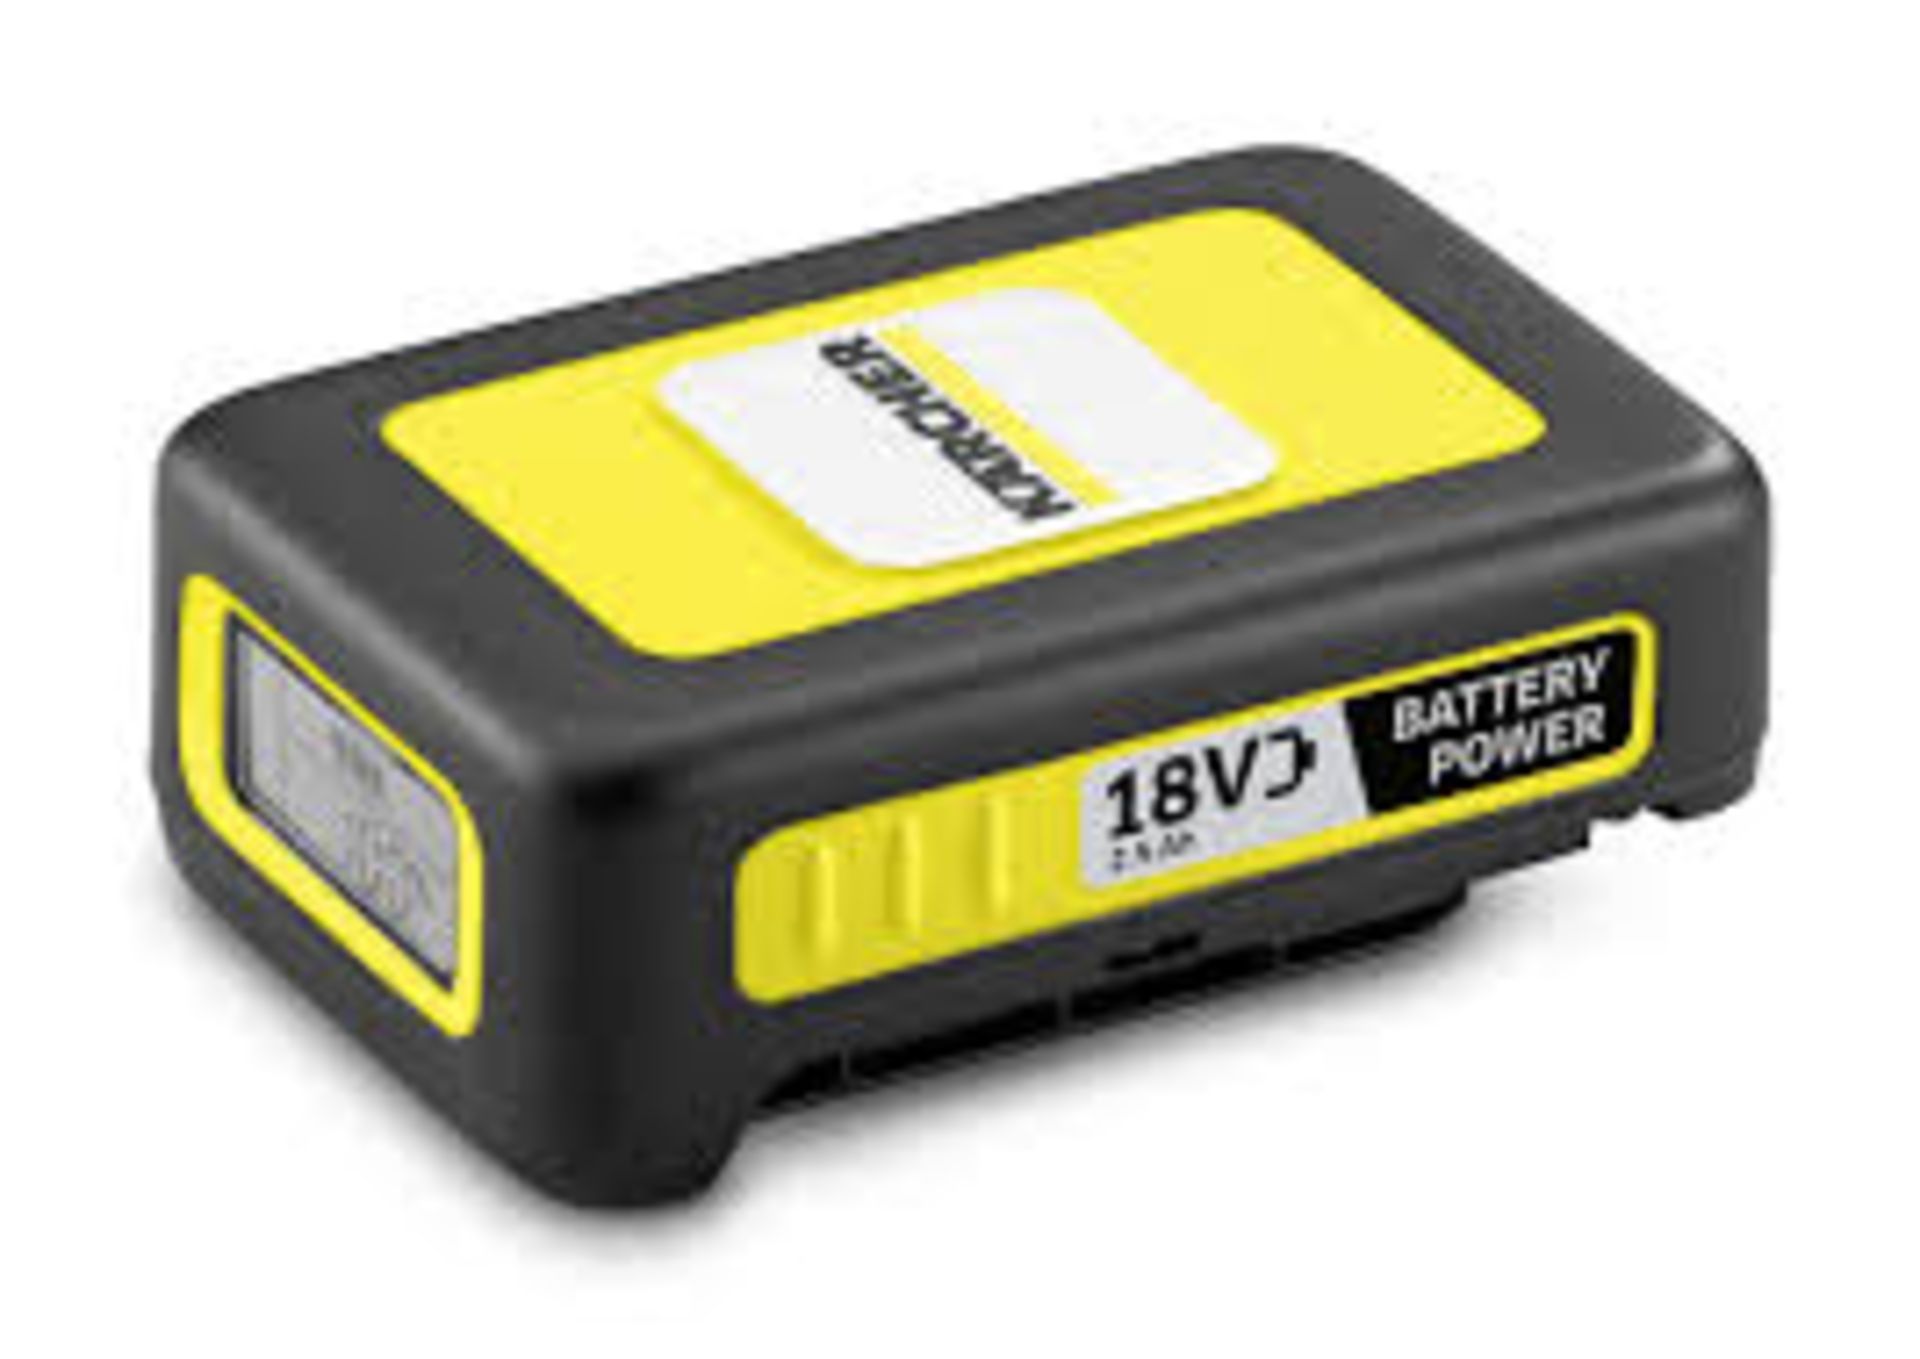 Kärcher 18 V / 2.5 Ah Rechargeable Battery. - ER40.